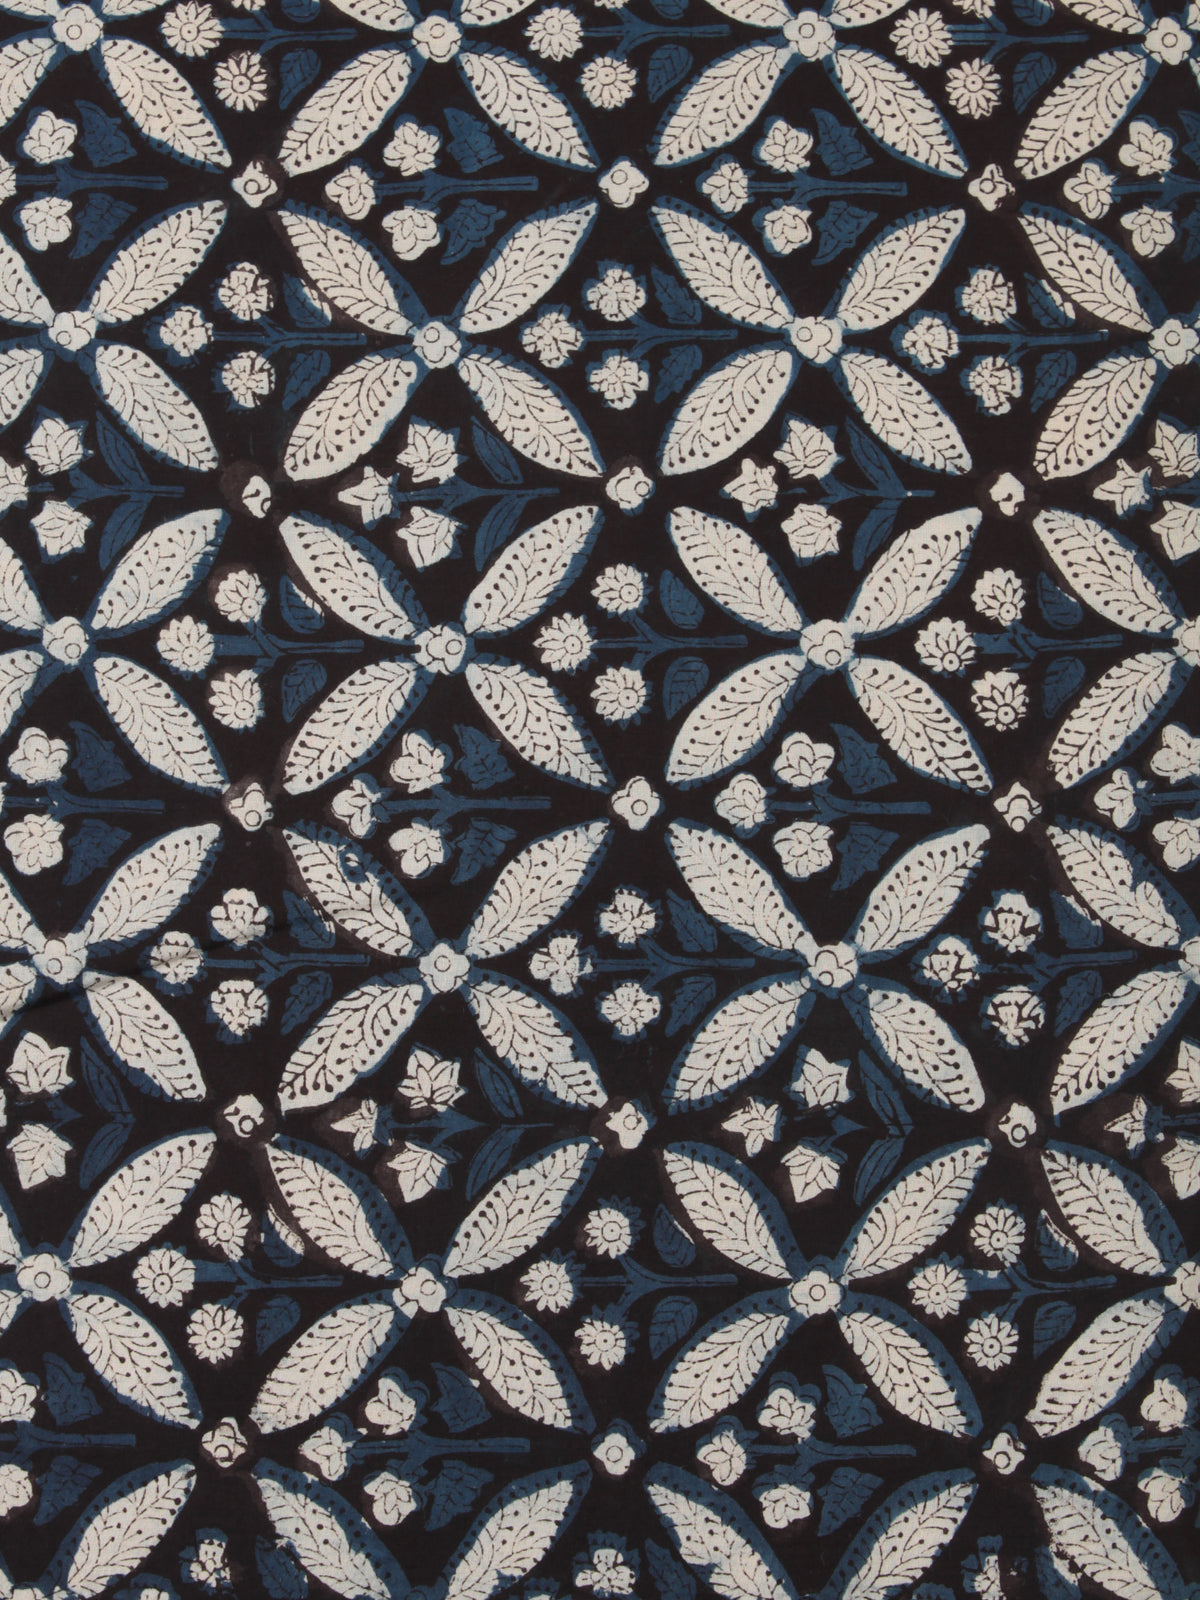 Indigo Black OffWhite Hand Block Printed Cotton Fabric Per Meter - F001F2461